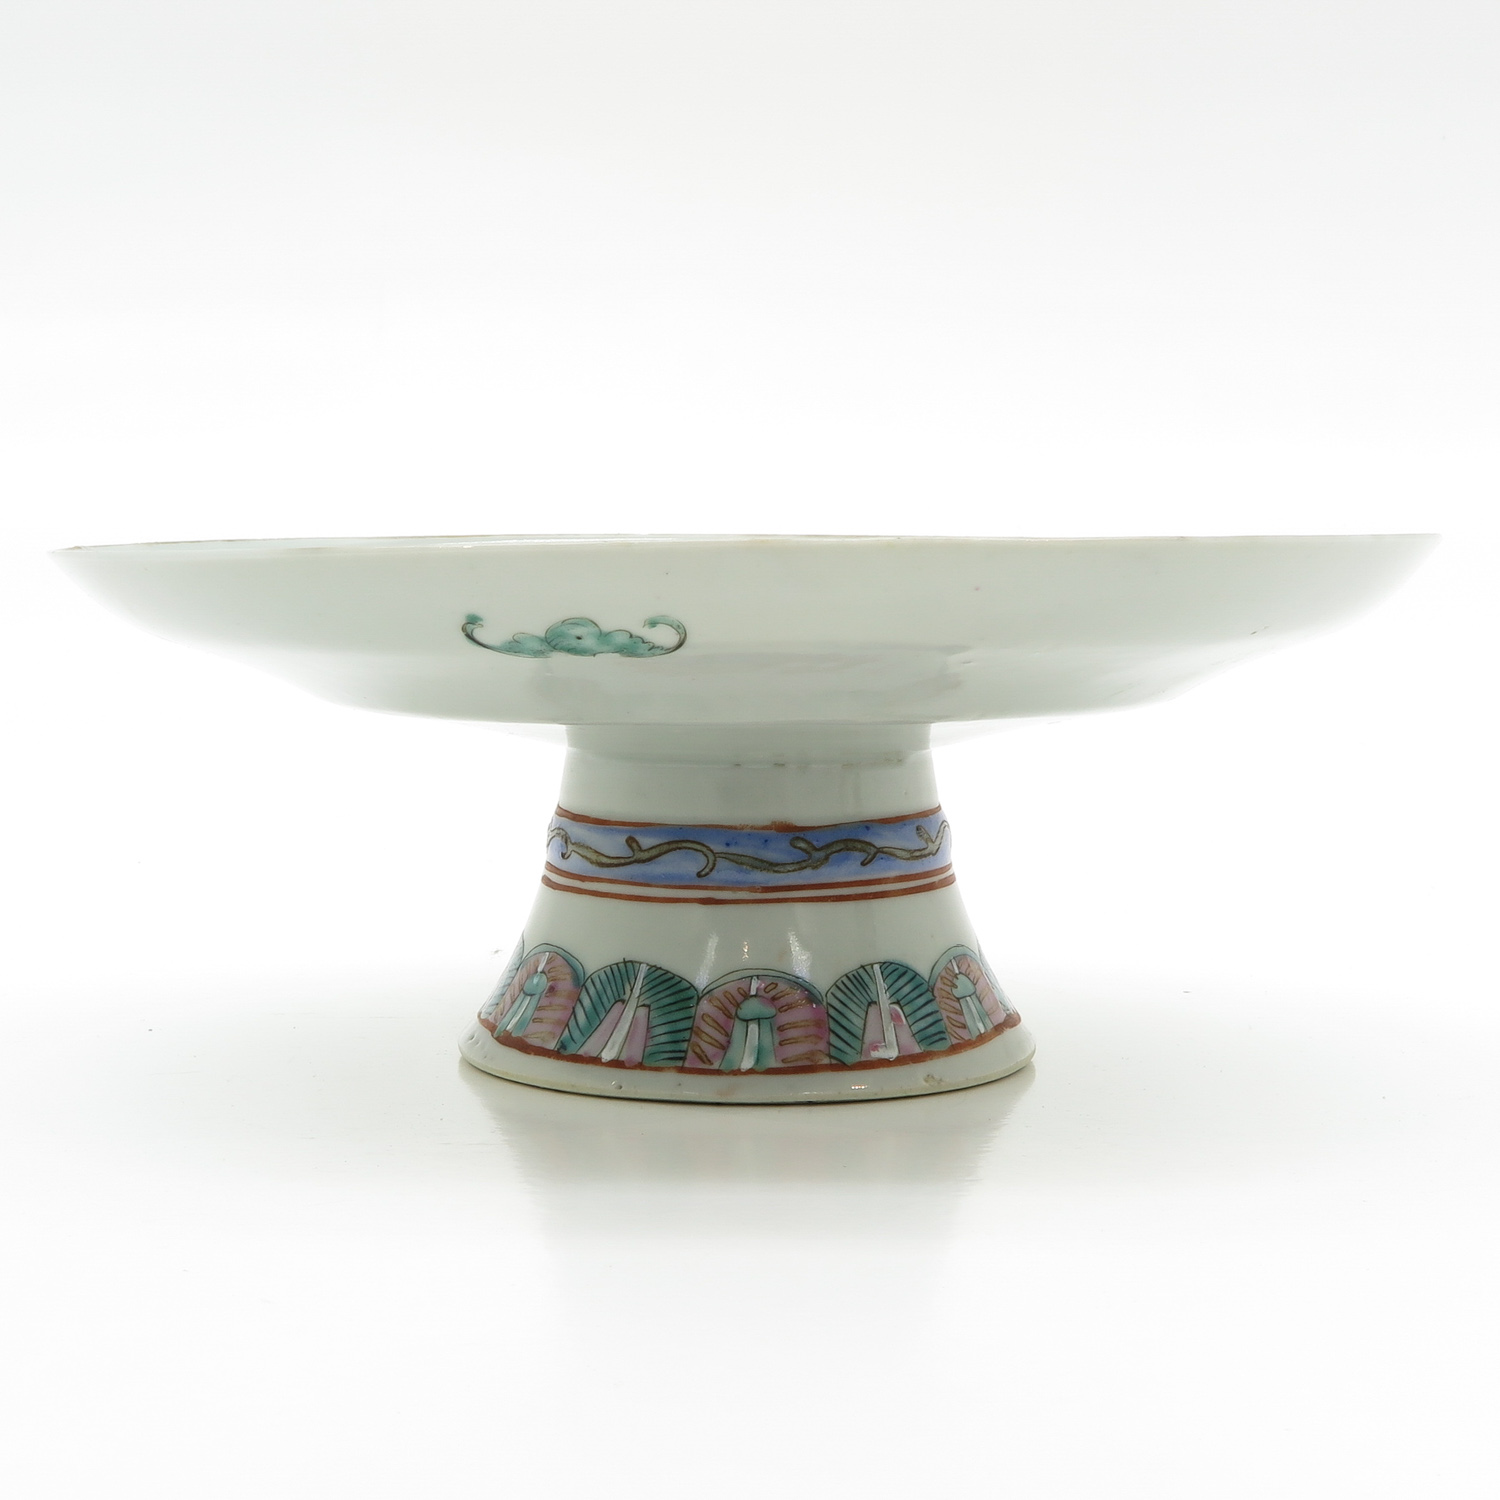 China Porcelain Cake Stand - Image 3 of 6